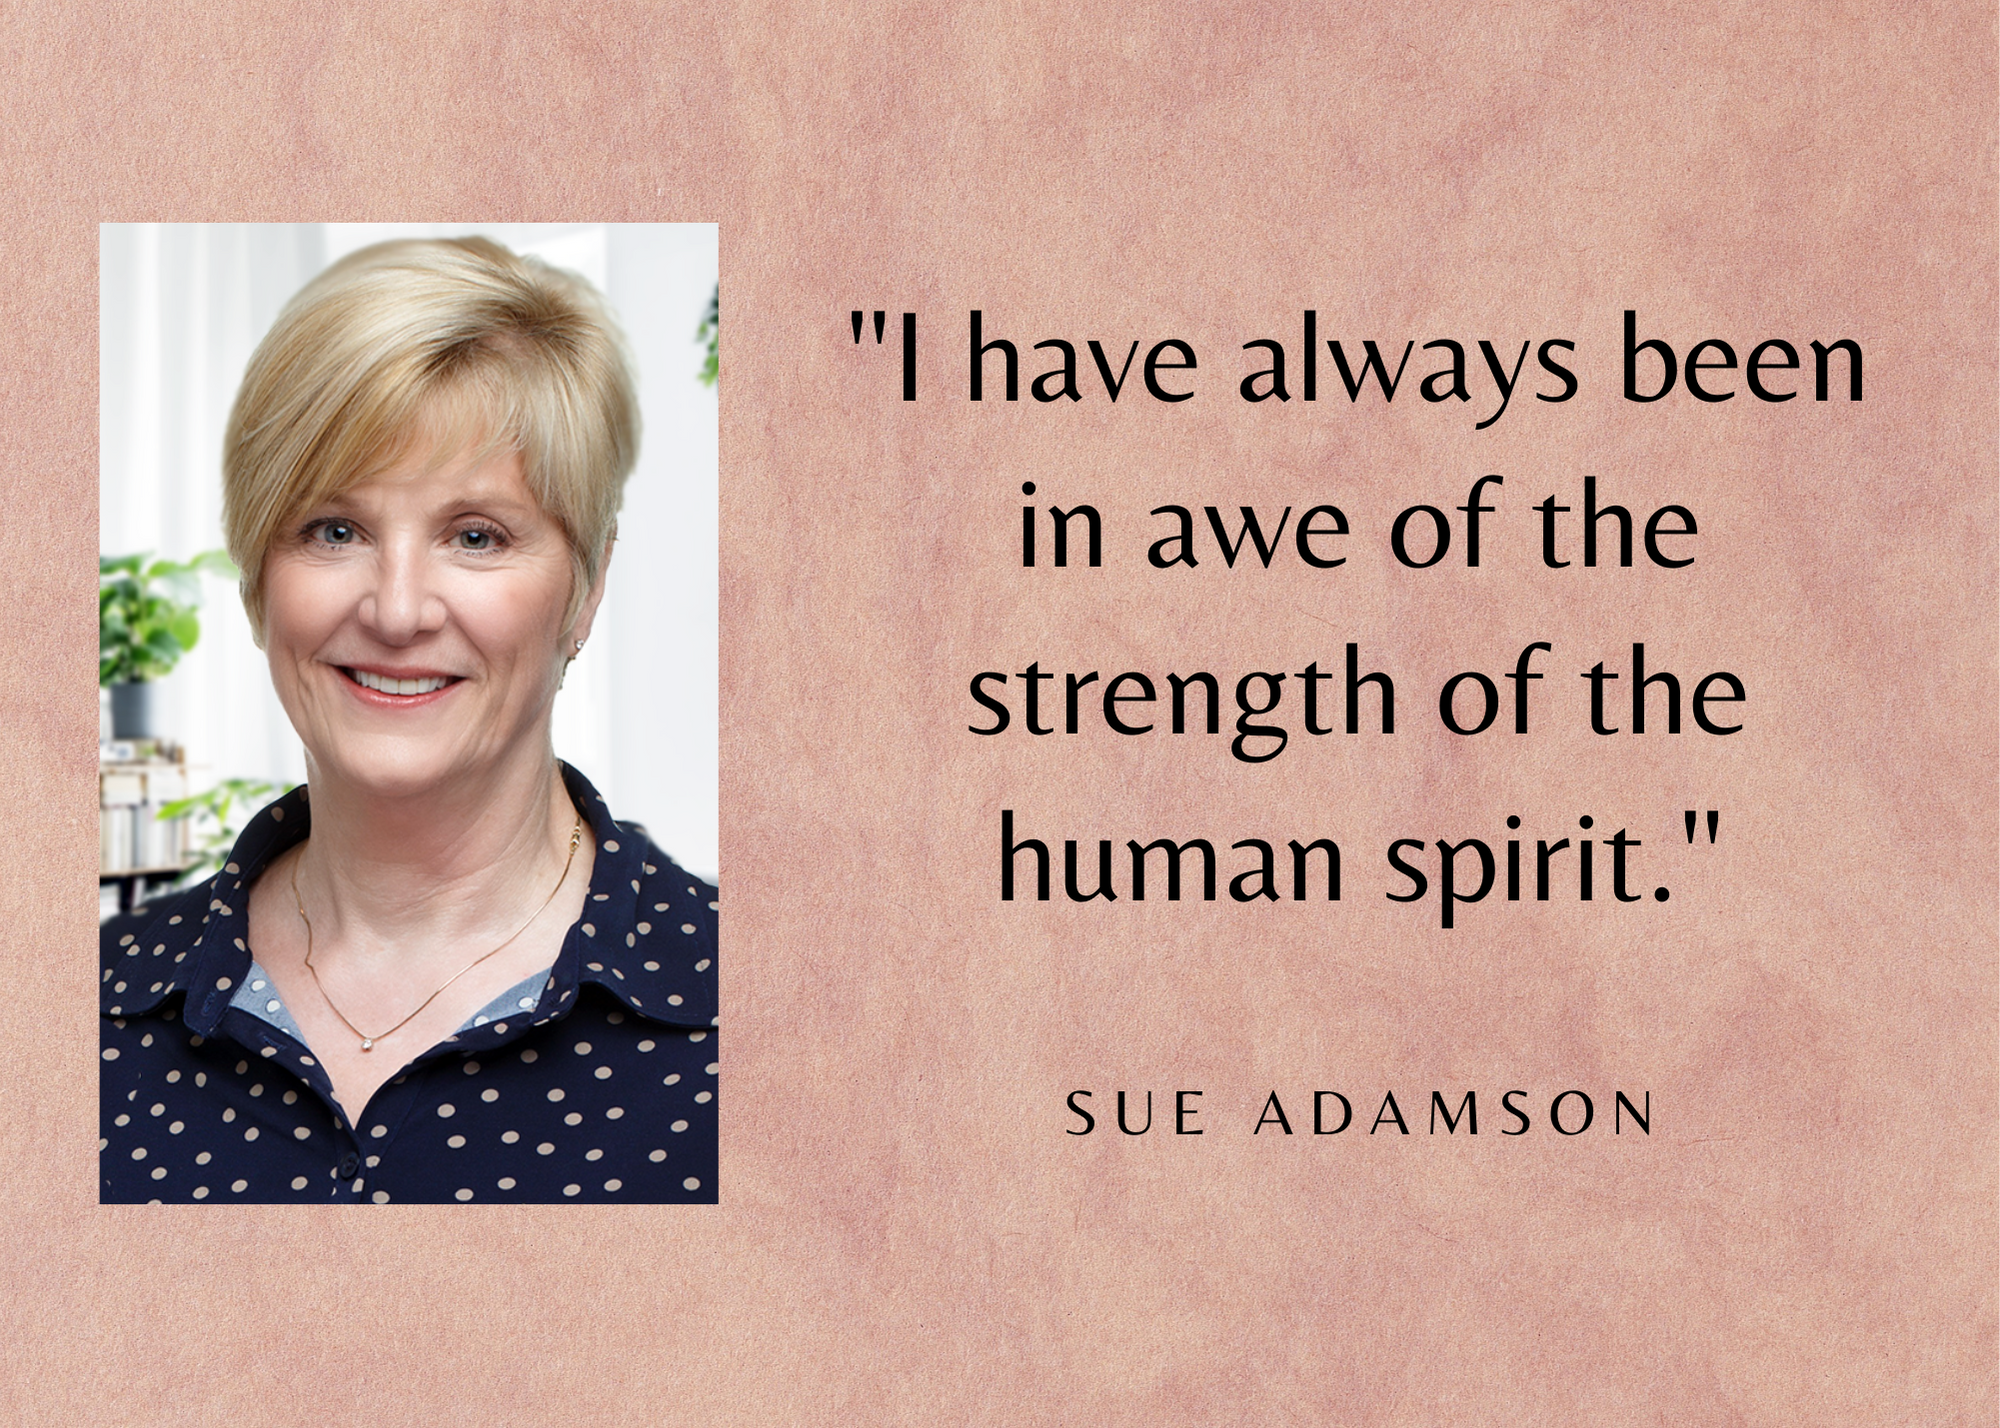 Sue Adamson, Tuesday, December 7, 2021, Press release picture